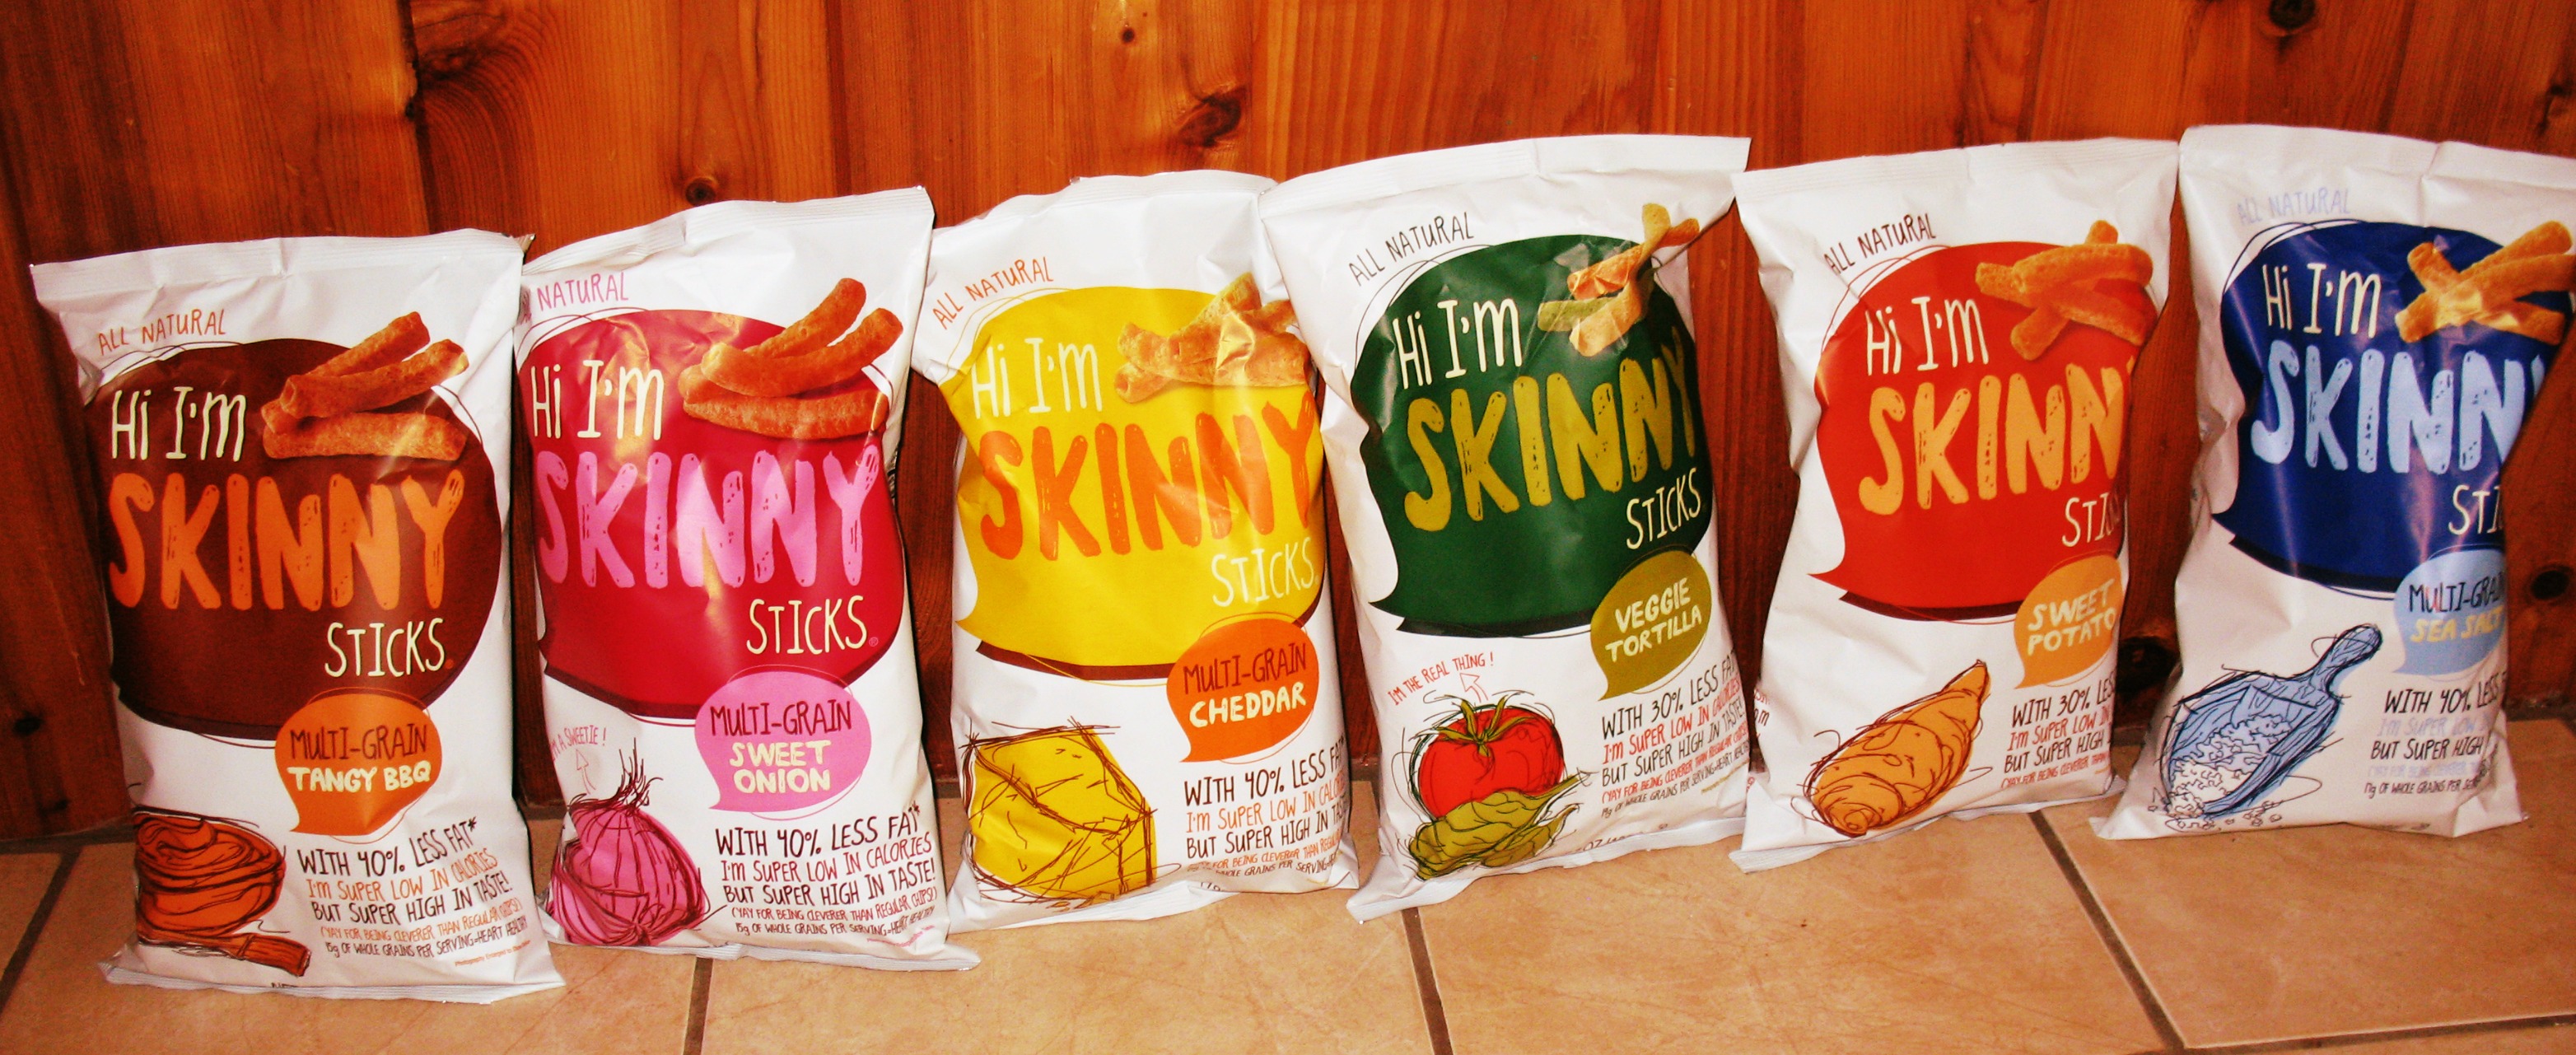 Hi I'm Skinny Snacks